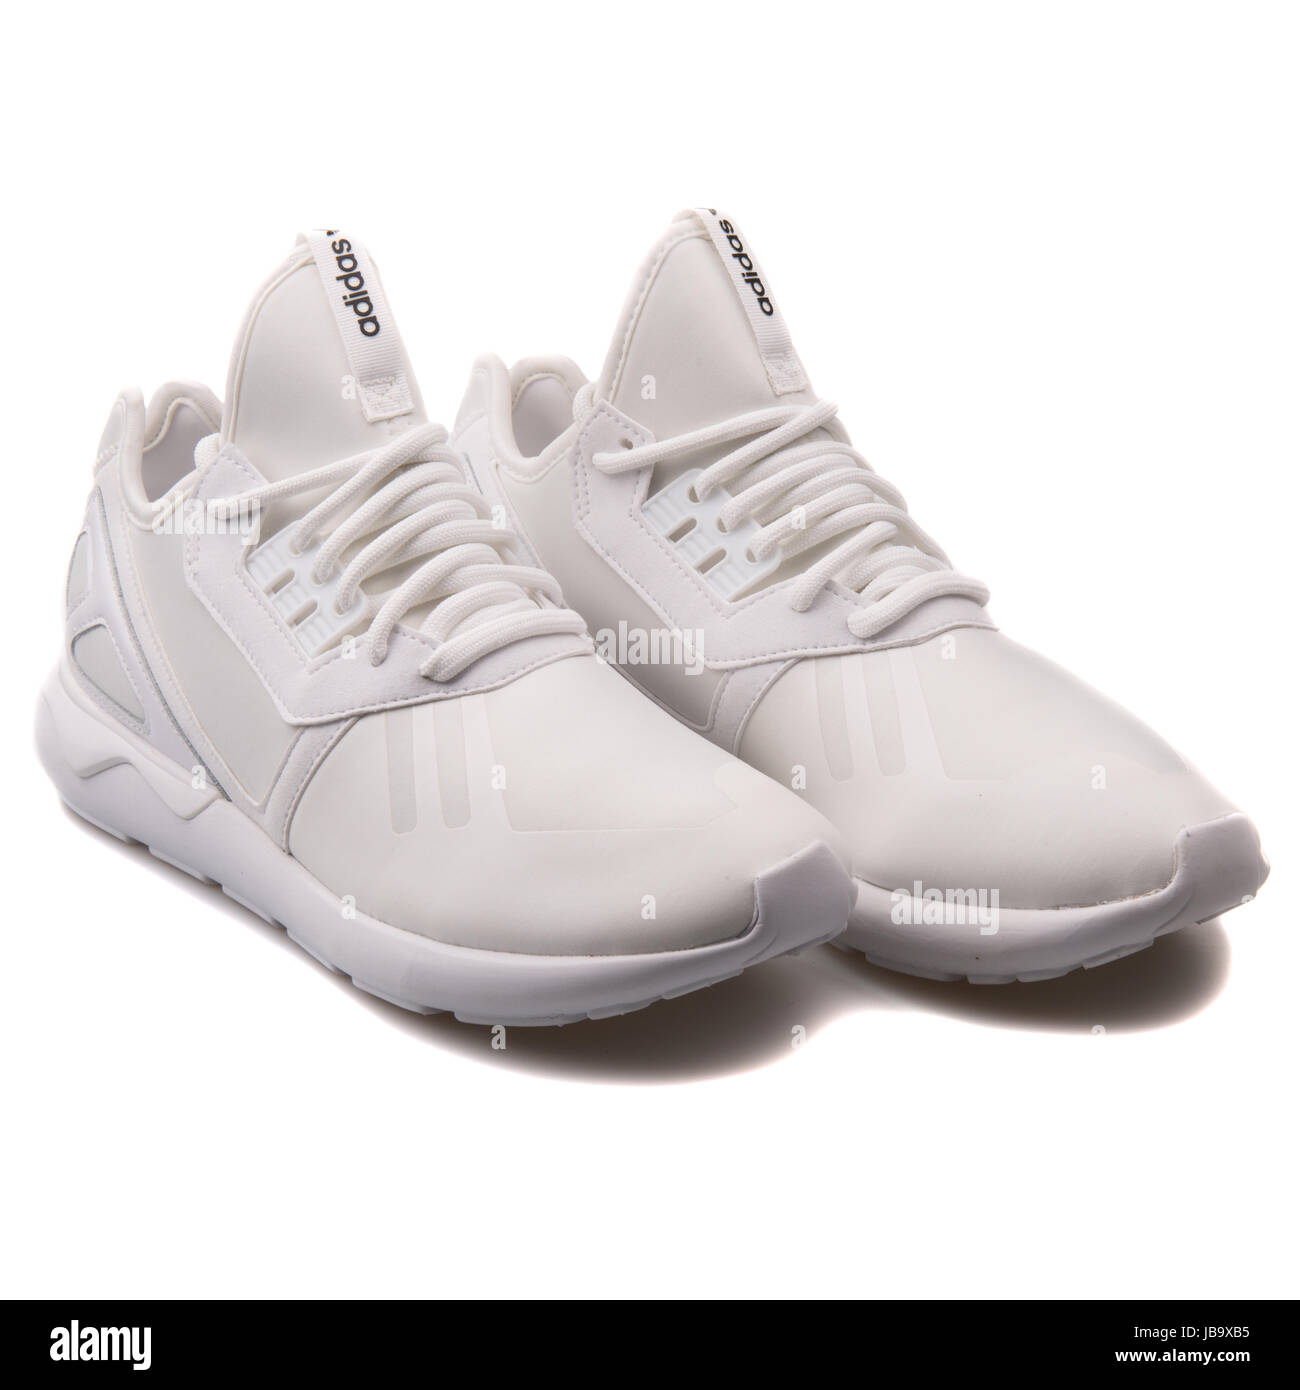 Adidas Tubular Runner White Men's Running Shoes - S83141 Stock Photo - Alamy